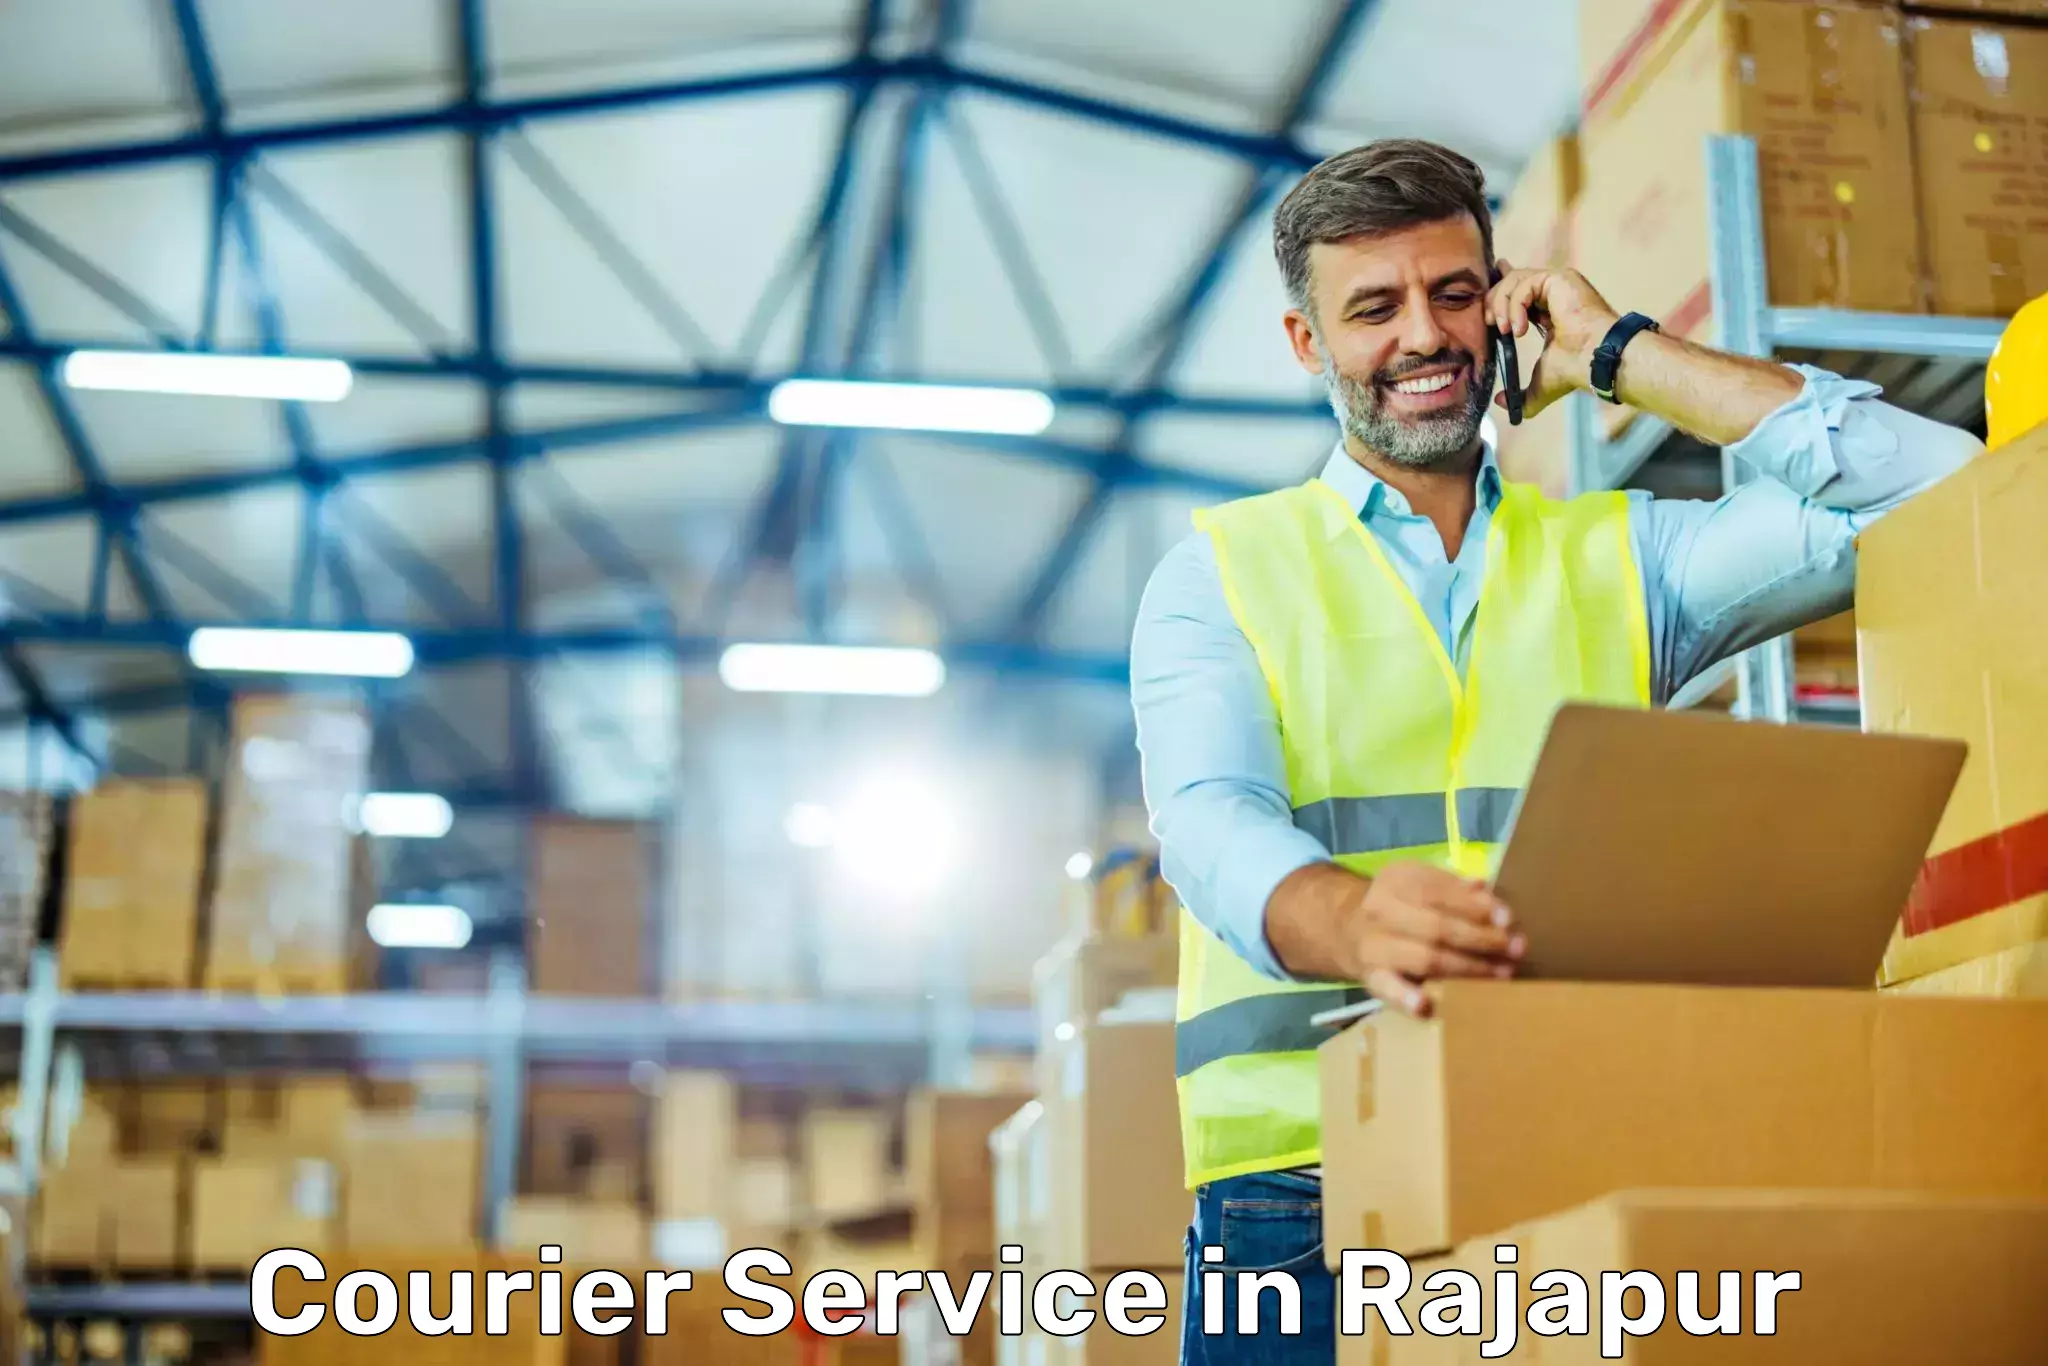 Efficient freight transportation in Rajapur